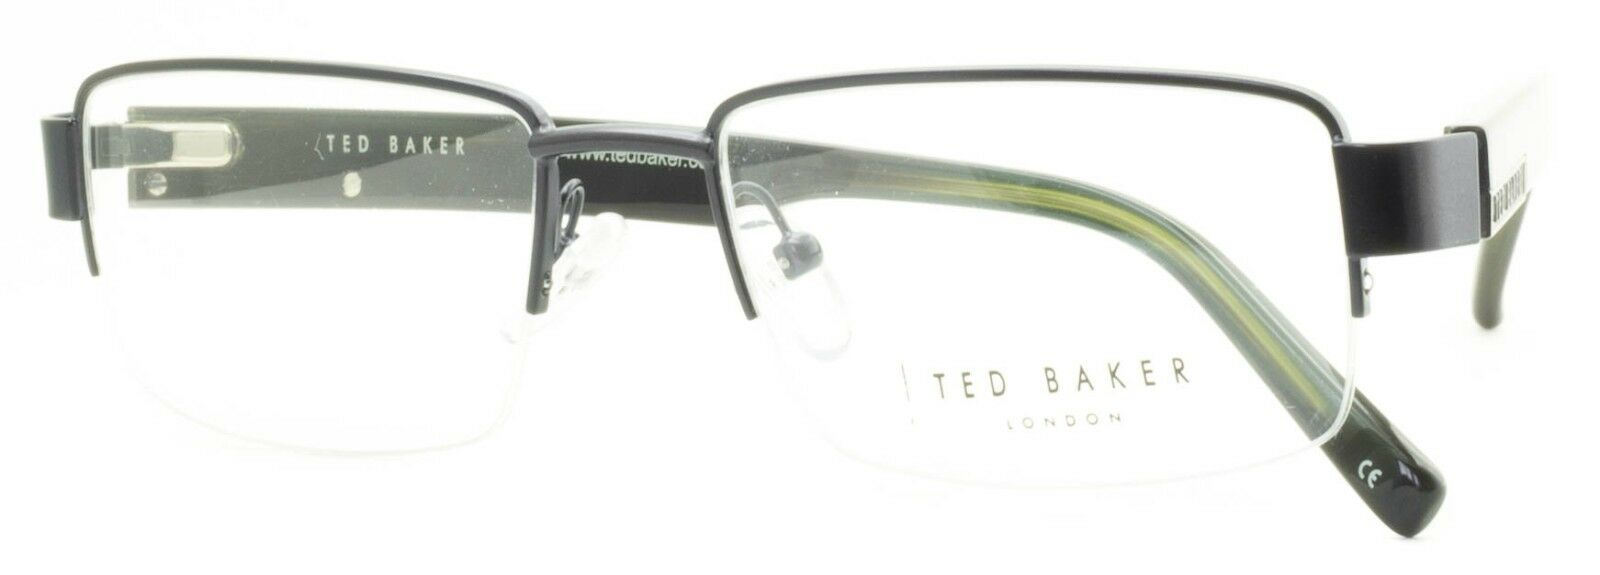 TED BAKER Spur 4216 631 54mm Eyewear FRAMES Glasses Eyeglasses RX Optical - New